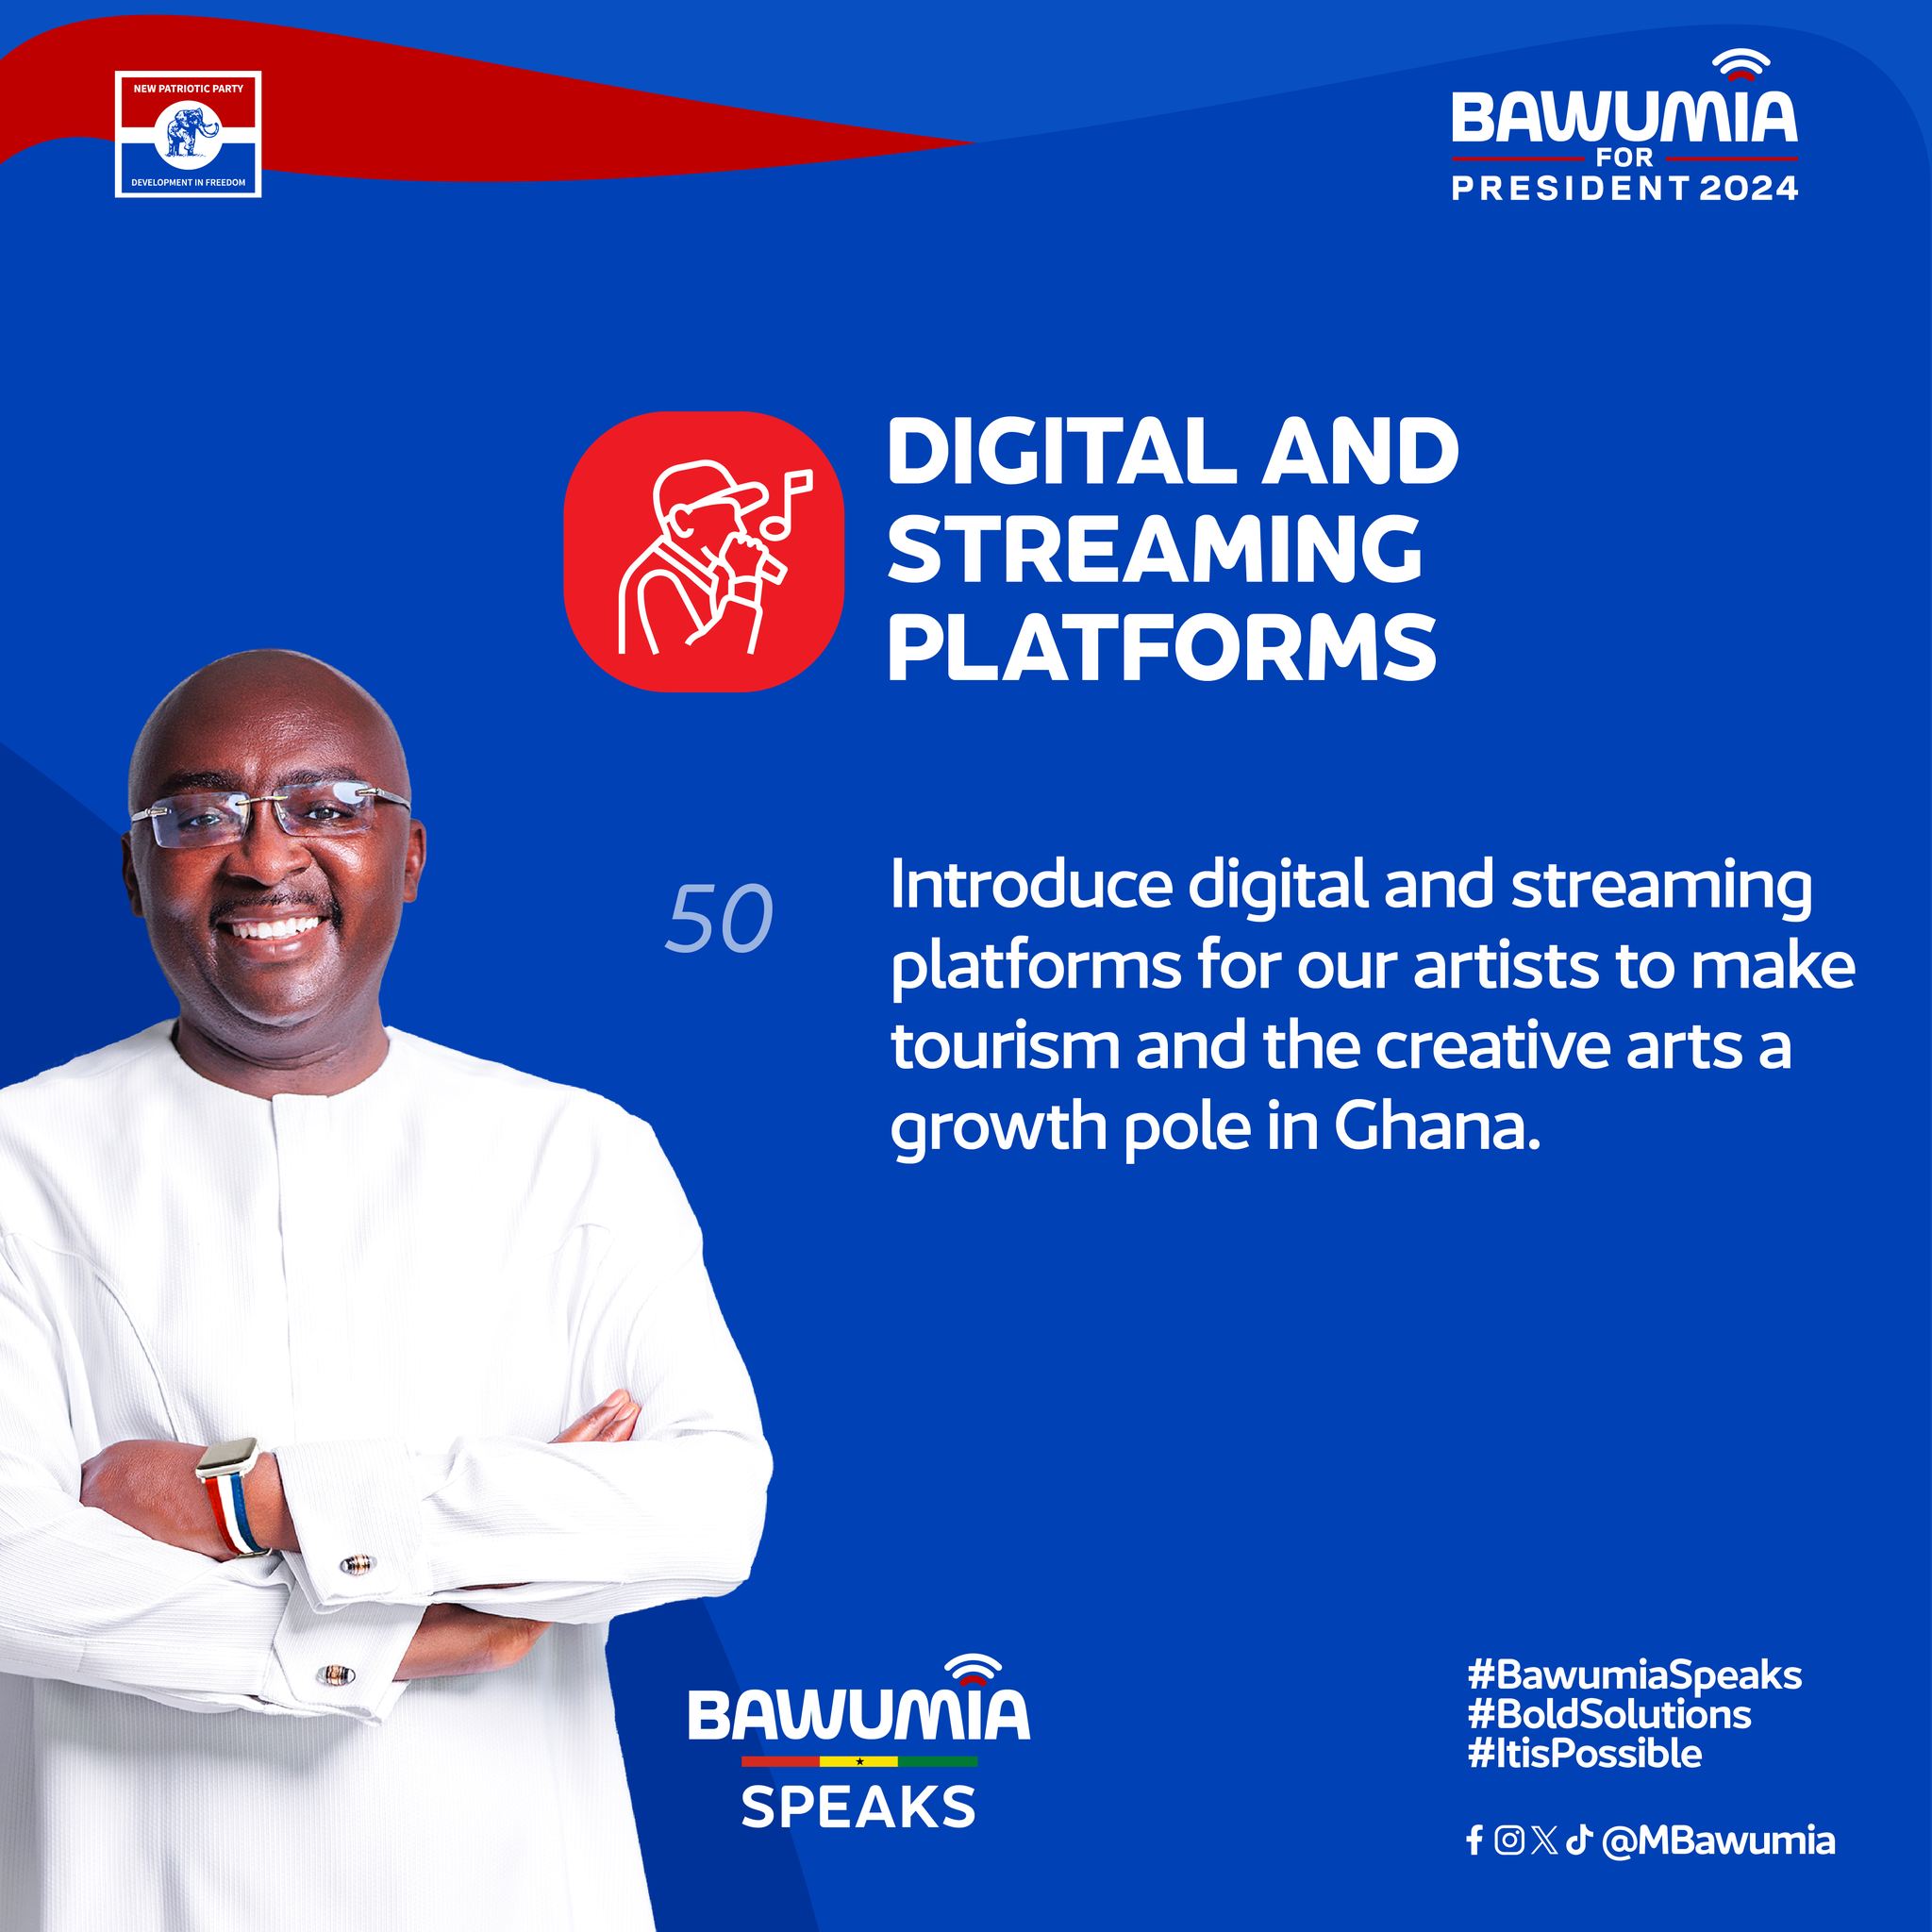 Big boost! Dr. Mahamadu Bawumia promises digital platforms & tax breaks for artists IF he wins